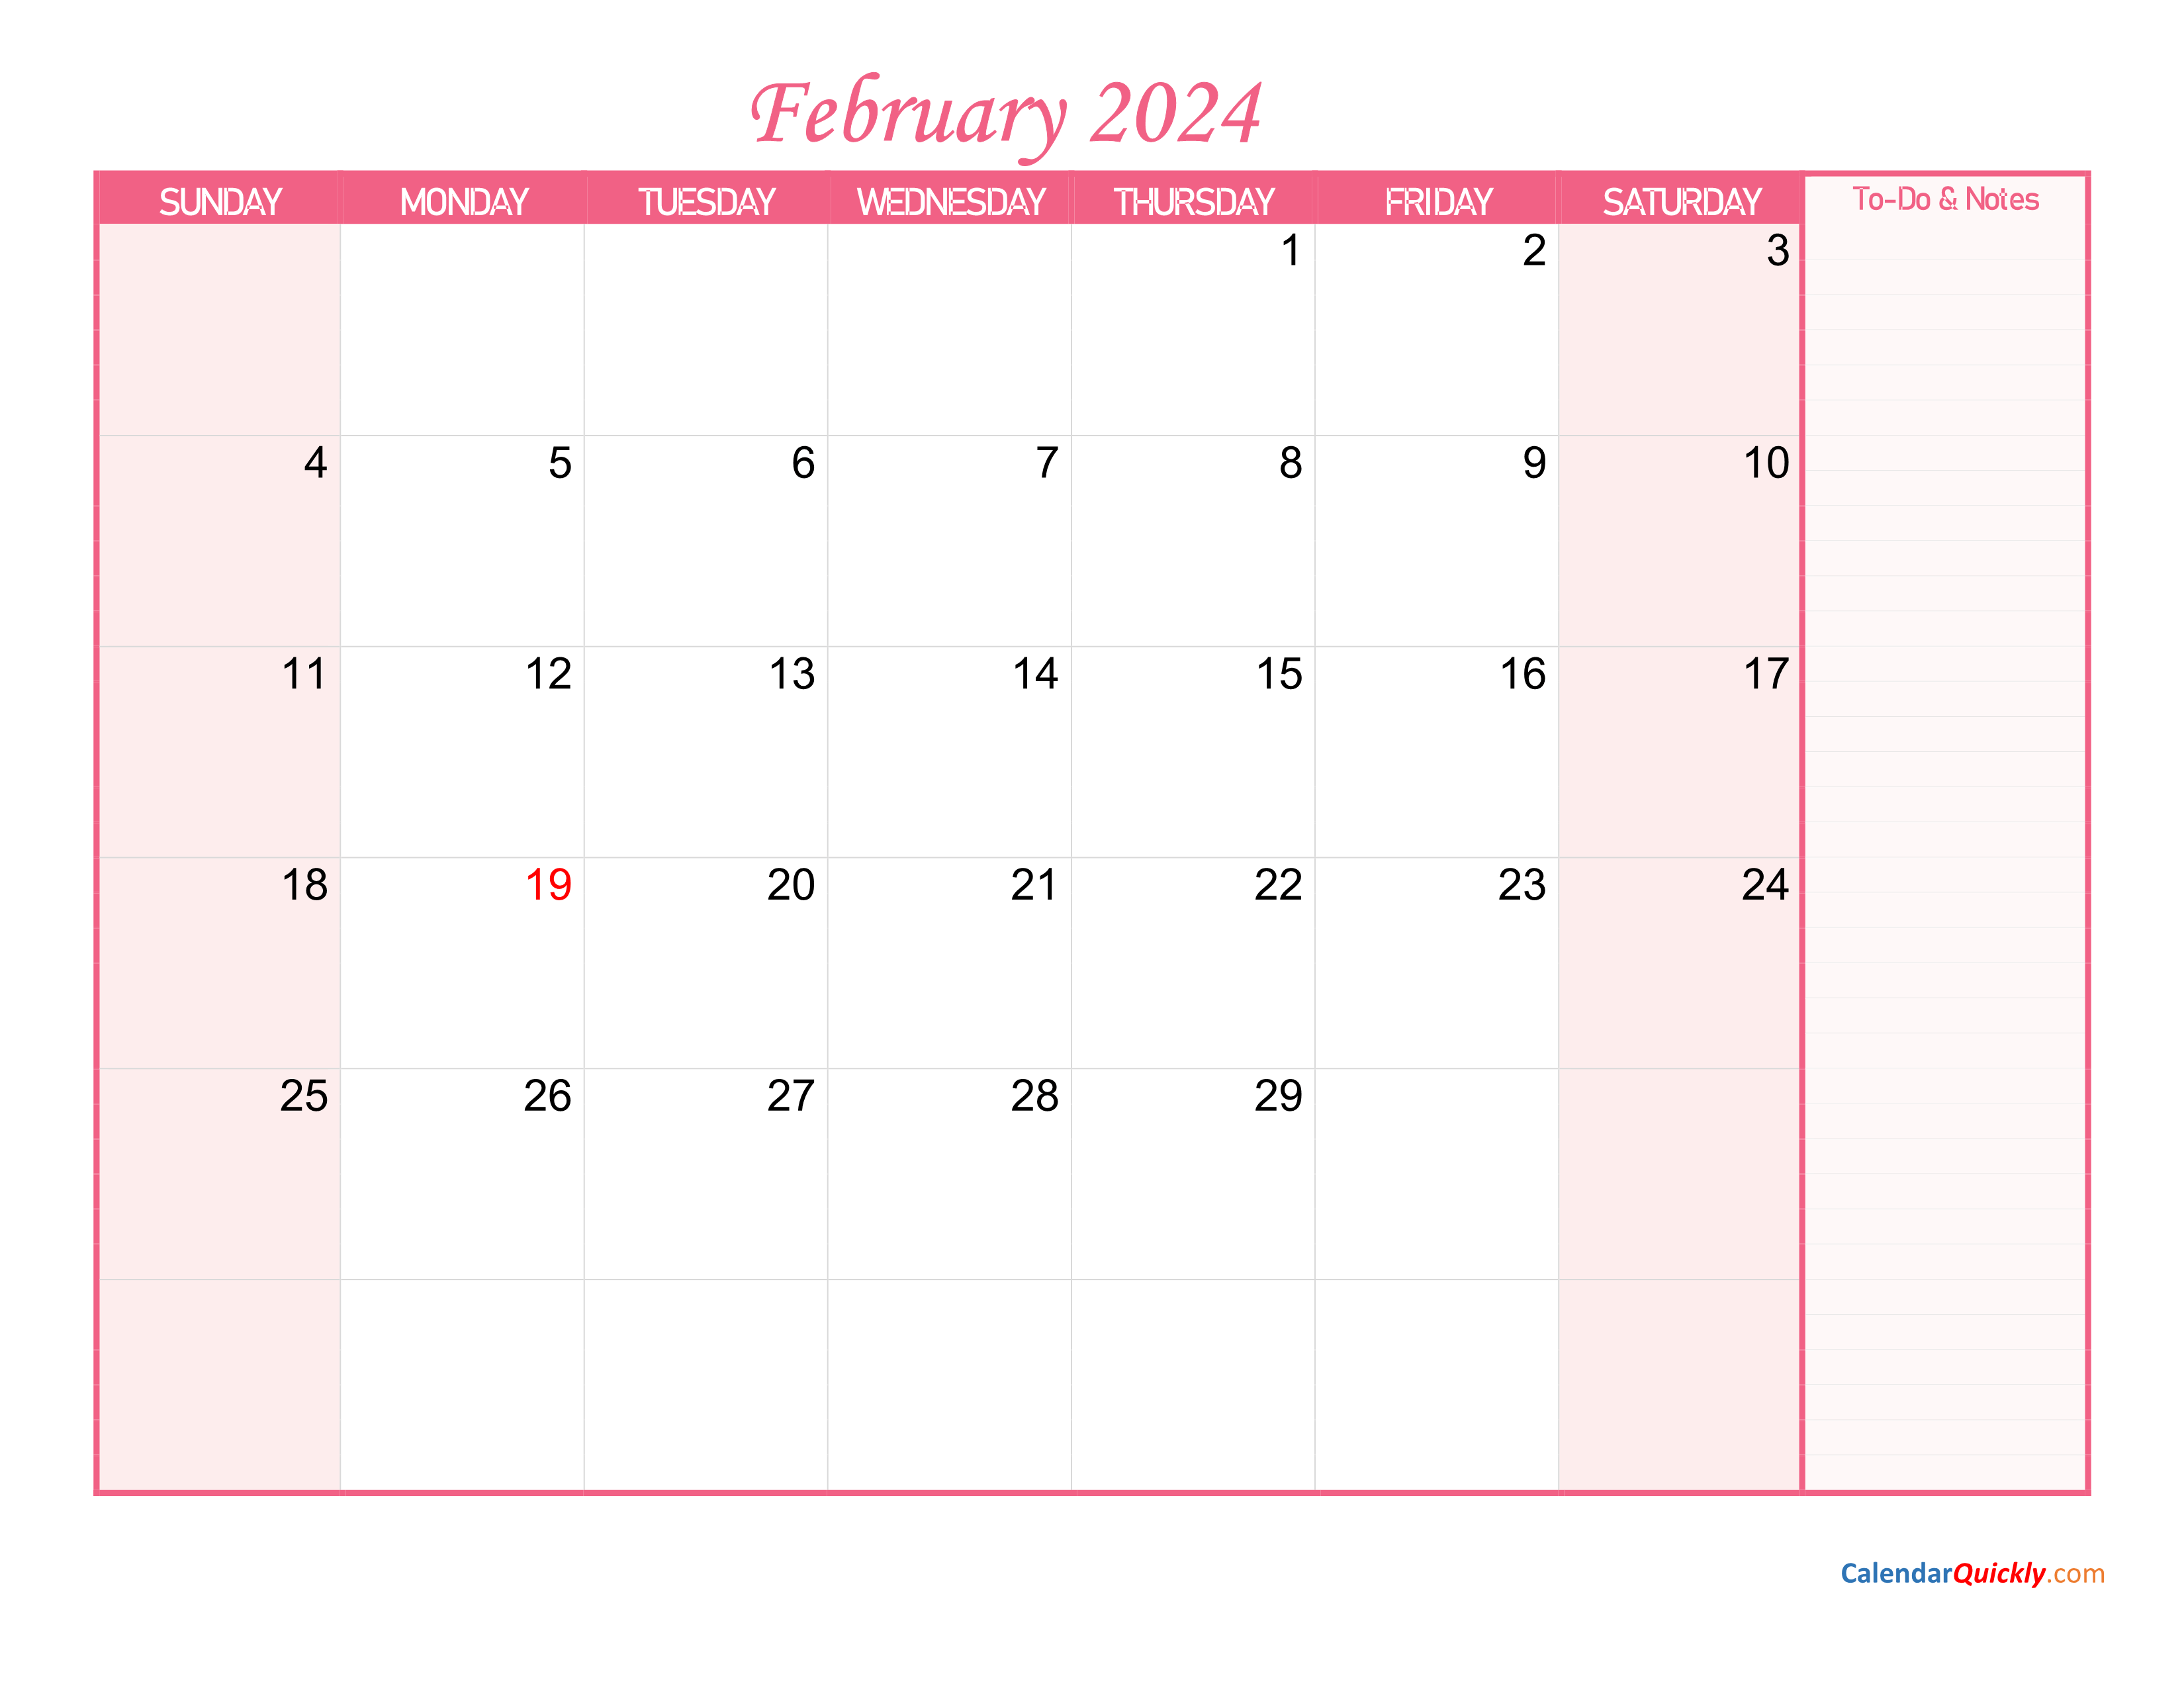 February Calendar 2024 with Notes Calendar Quickly